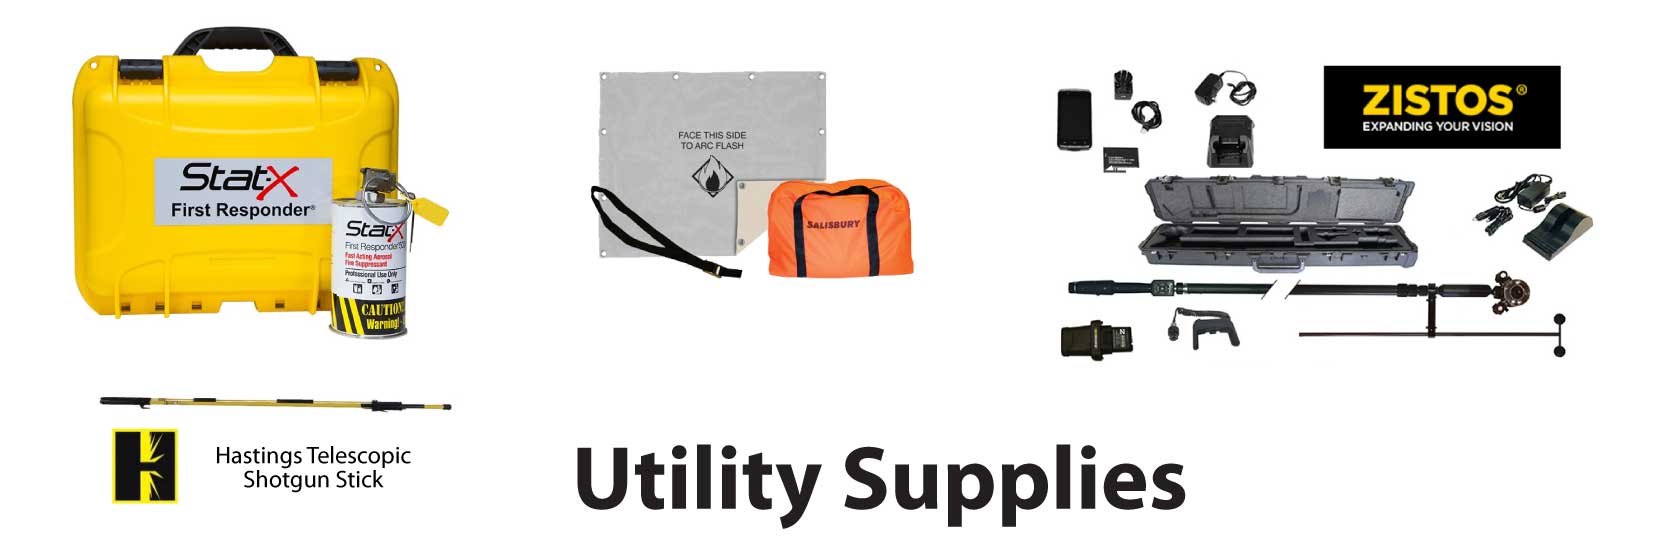 Utility Supplies banner